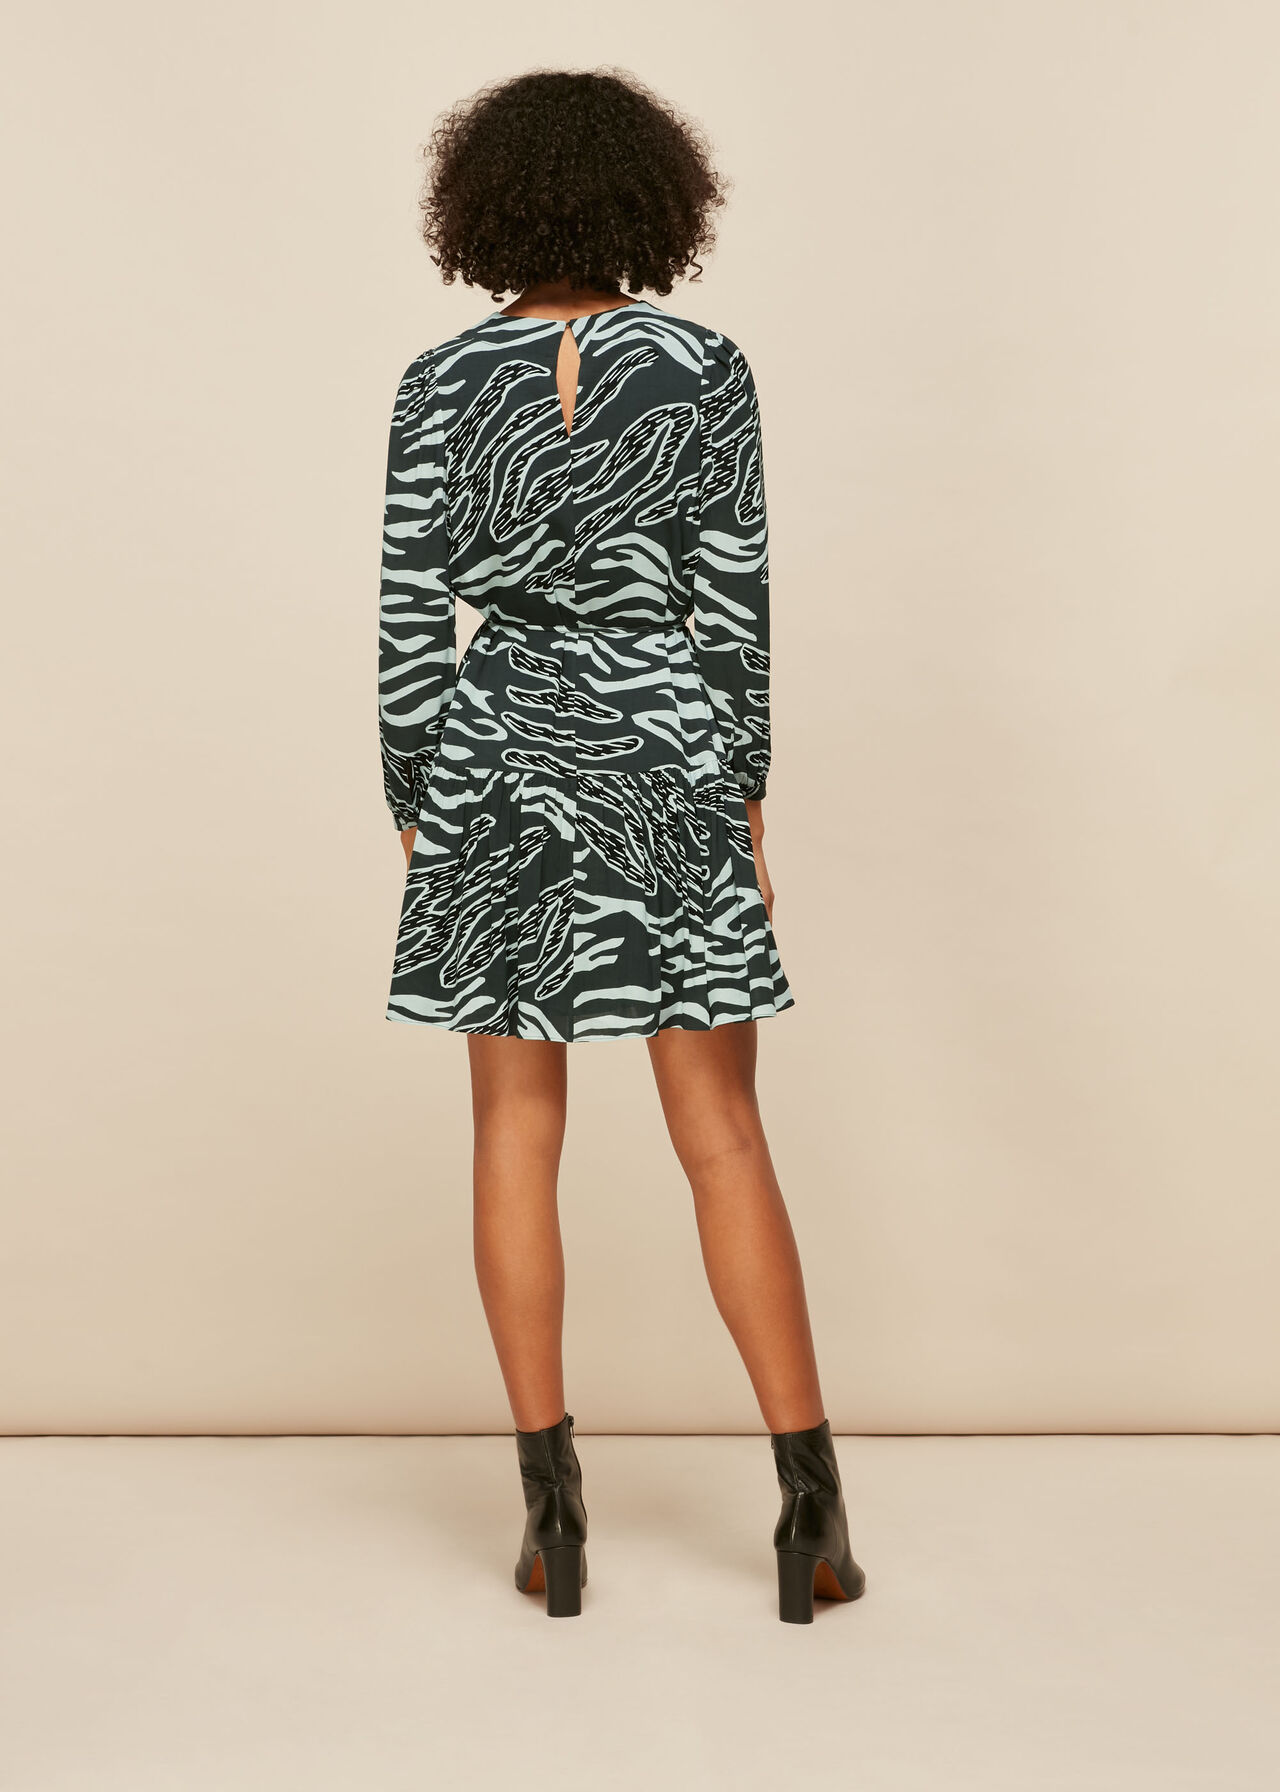 Graphic Zebra Print Dress